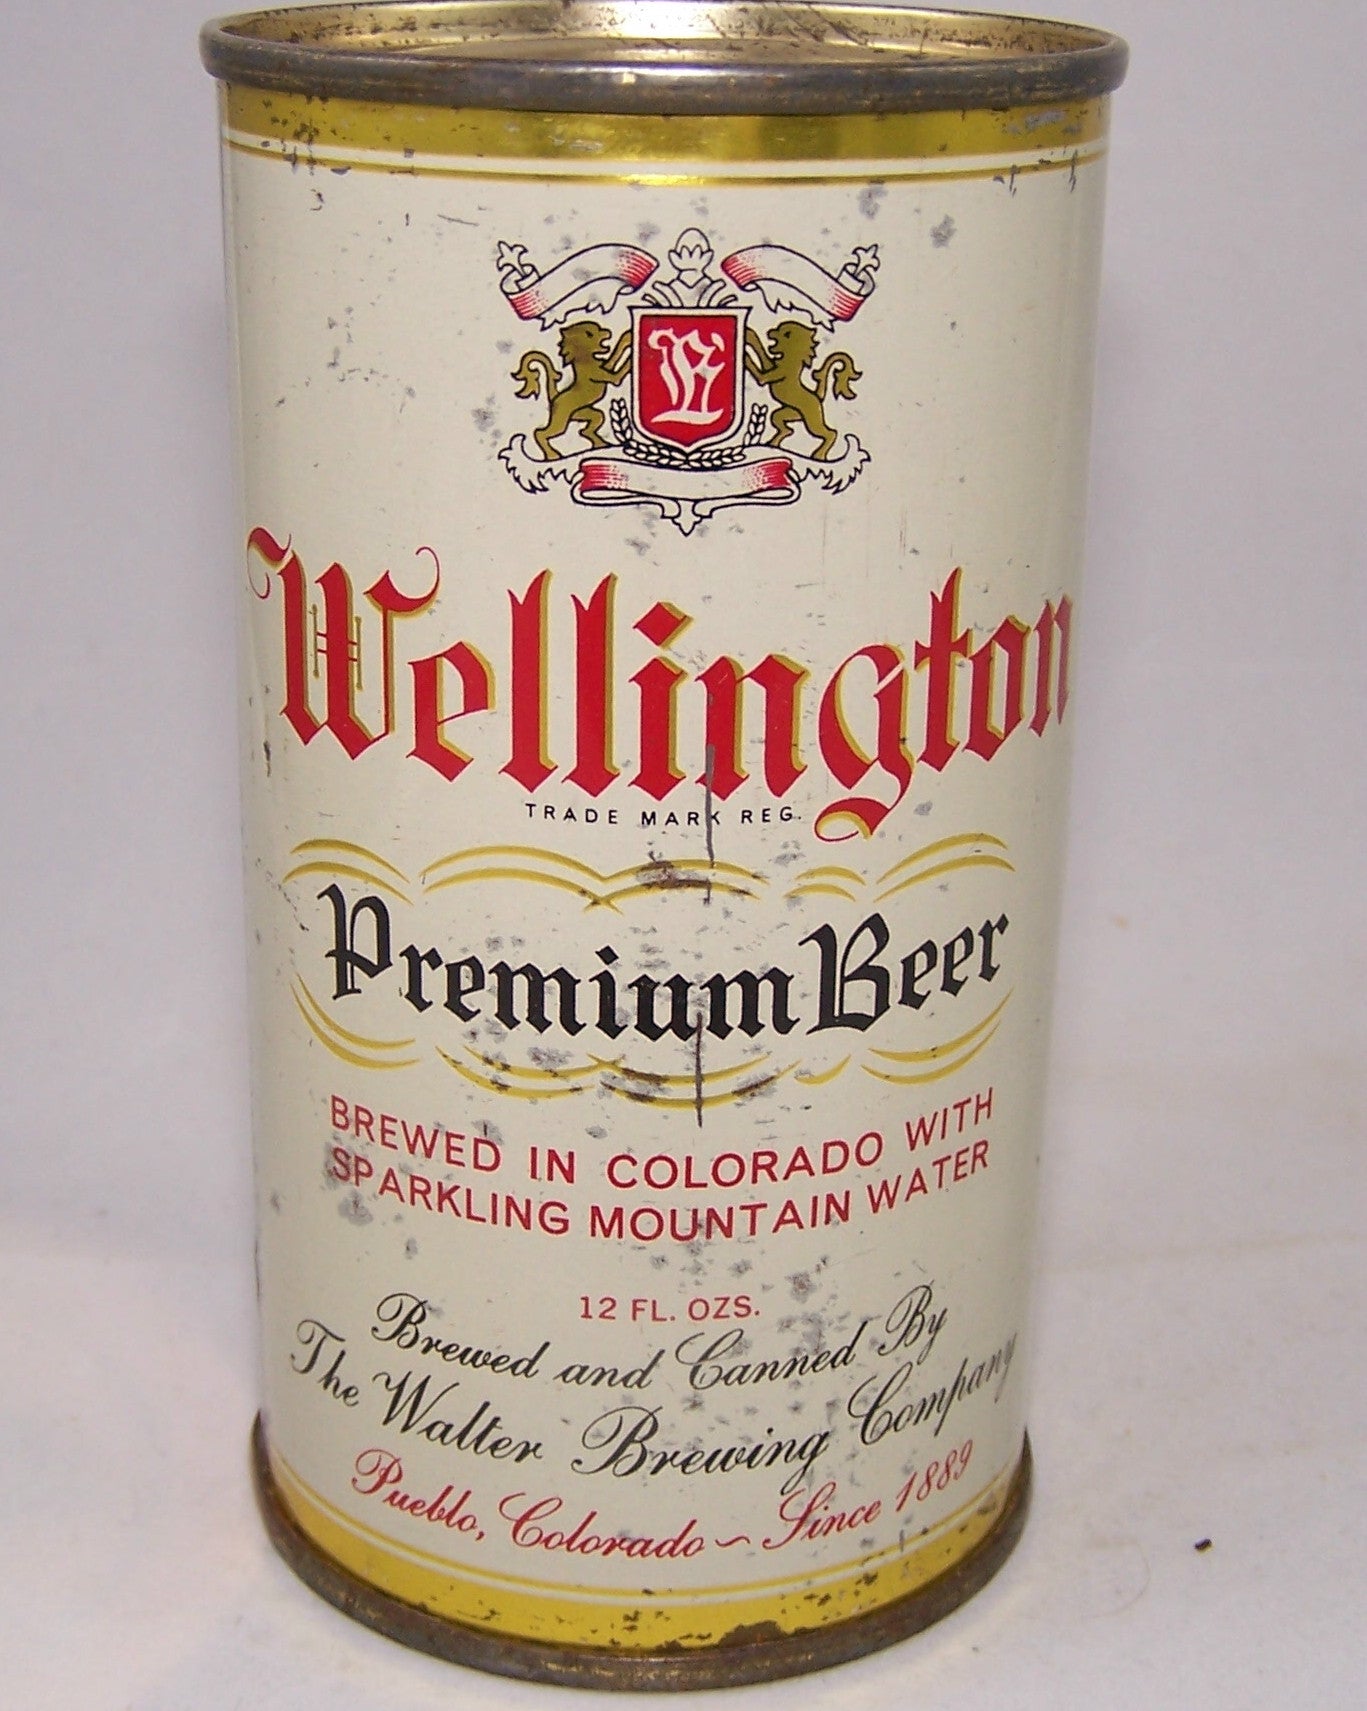 Wellington Premium Beer (Gold Trim) USBC 144-40, Grade 1- Sold on 09/05/16